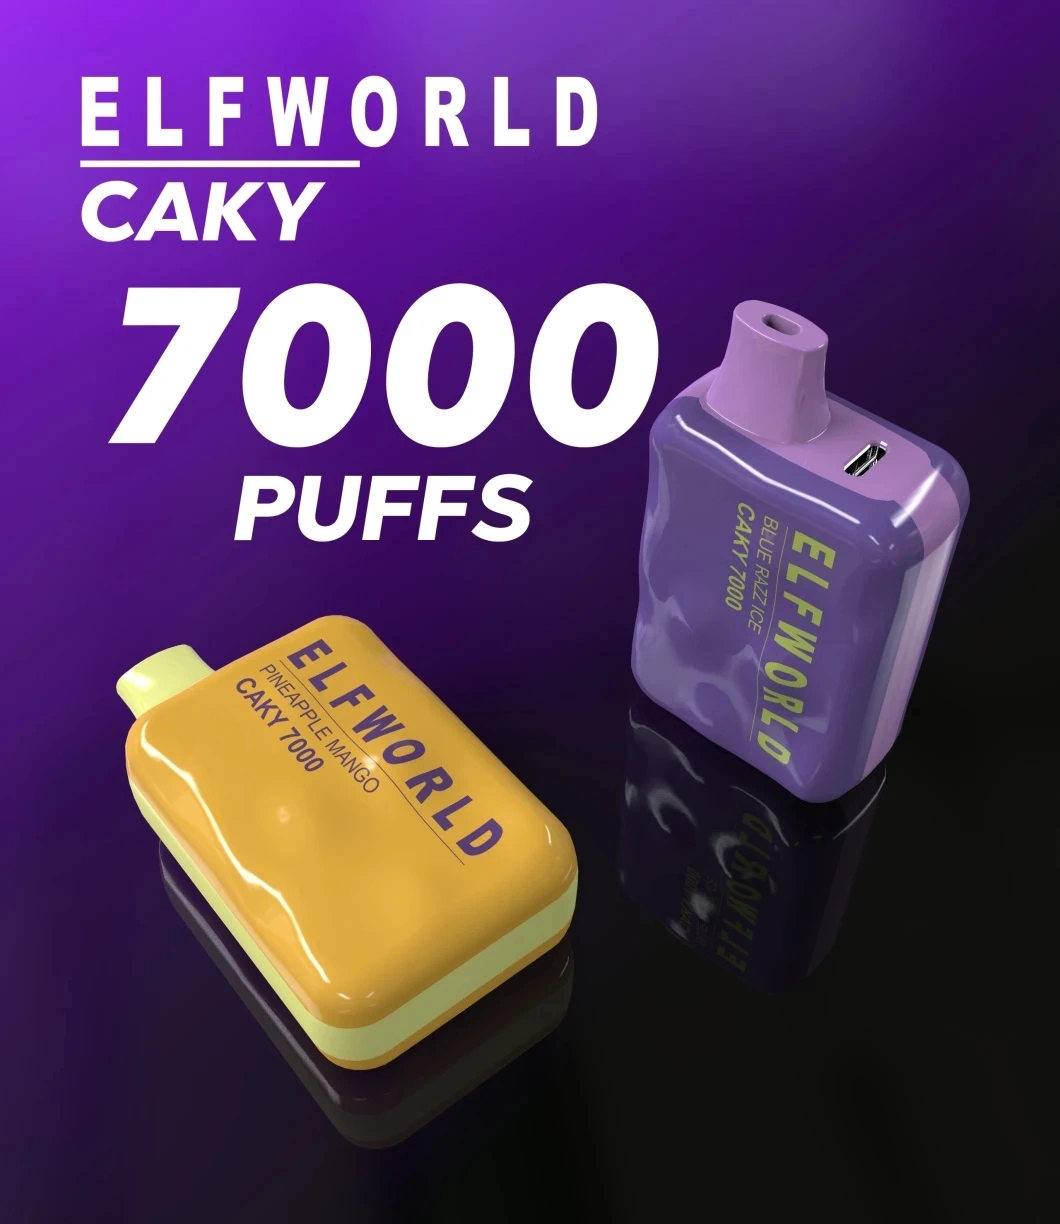 Original Elfworld Caky 7000 Puffs 14ml Prefilled 650mAh Rechargeable Battery E Cigarette Pen Wholesale Disposable Vape